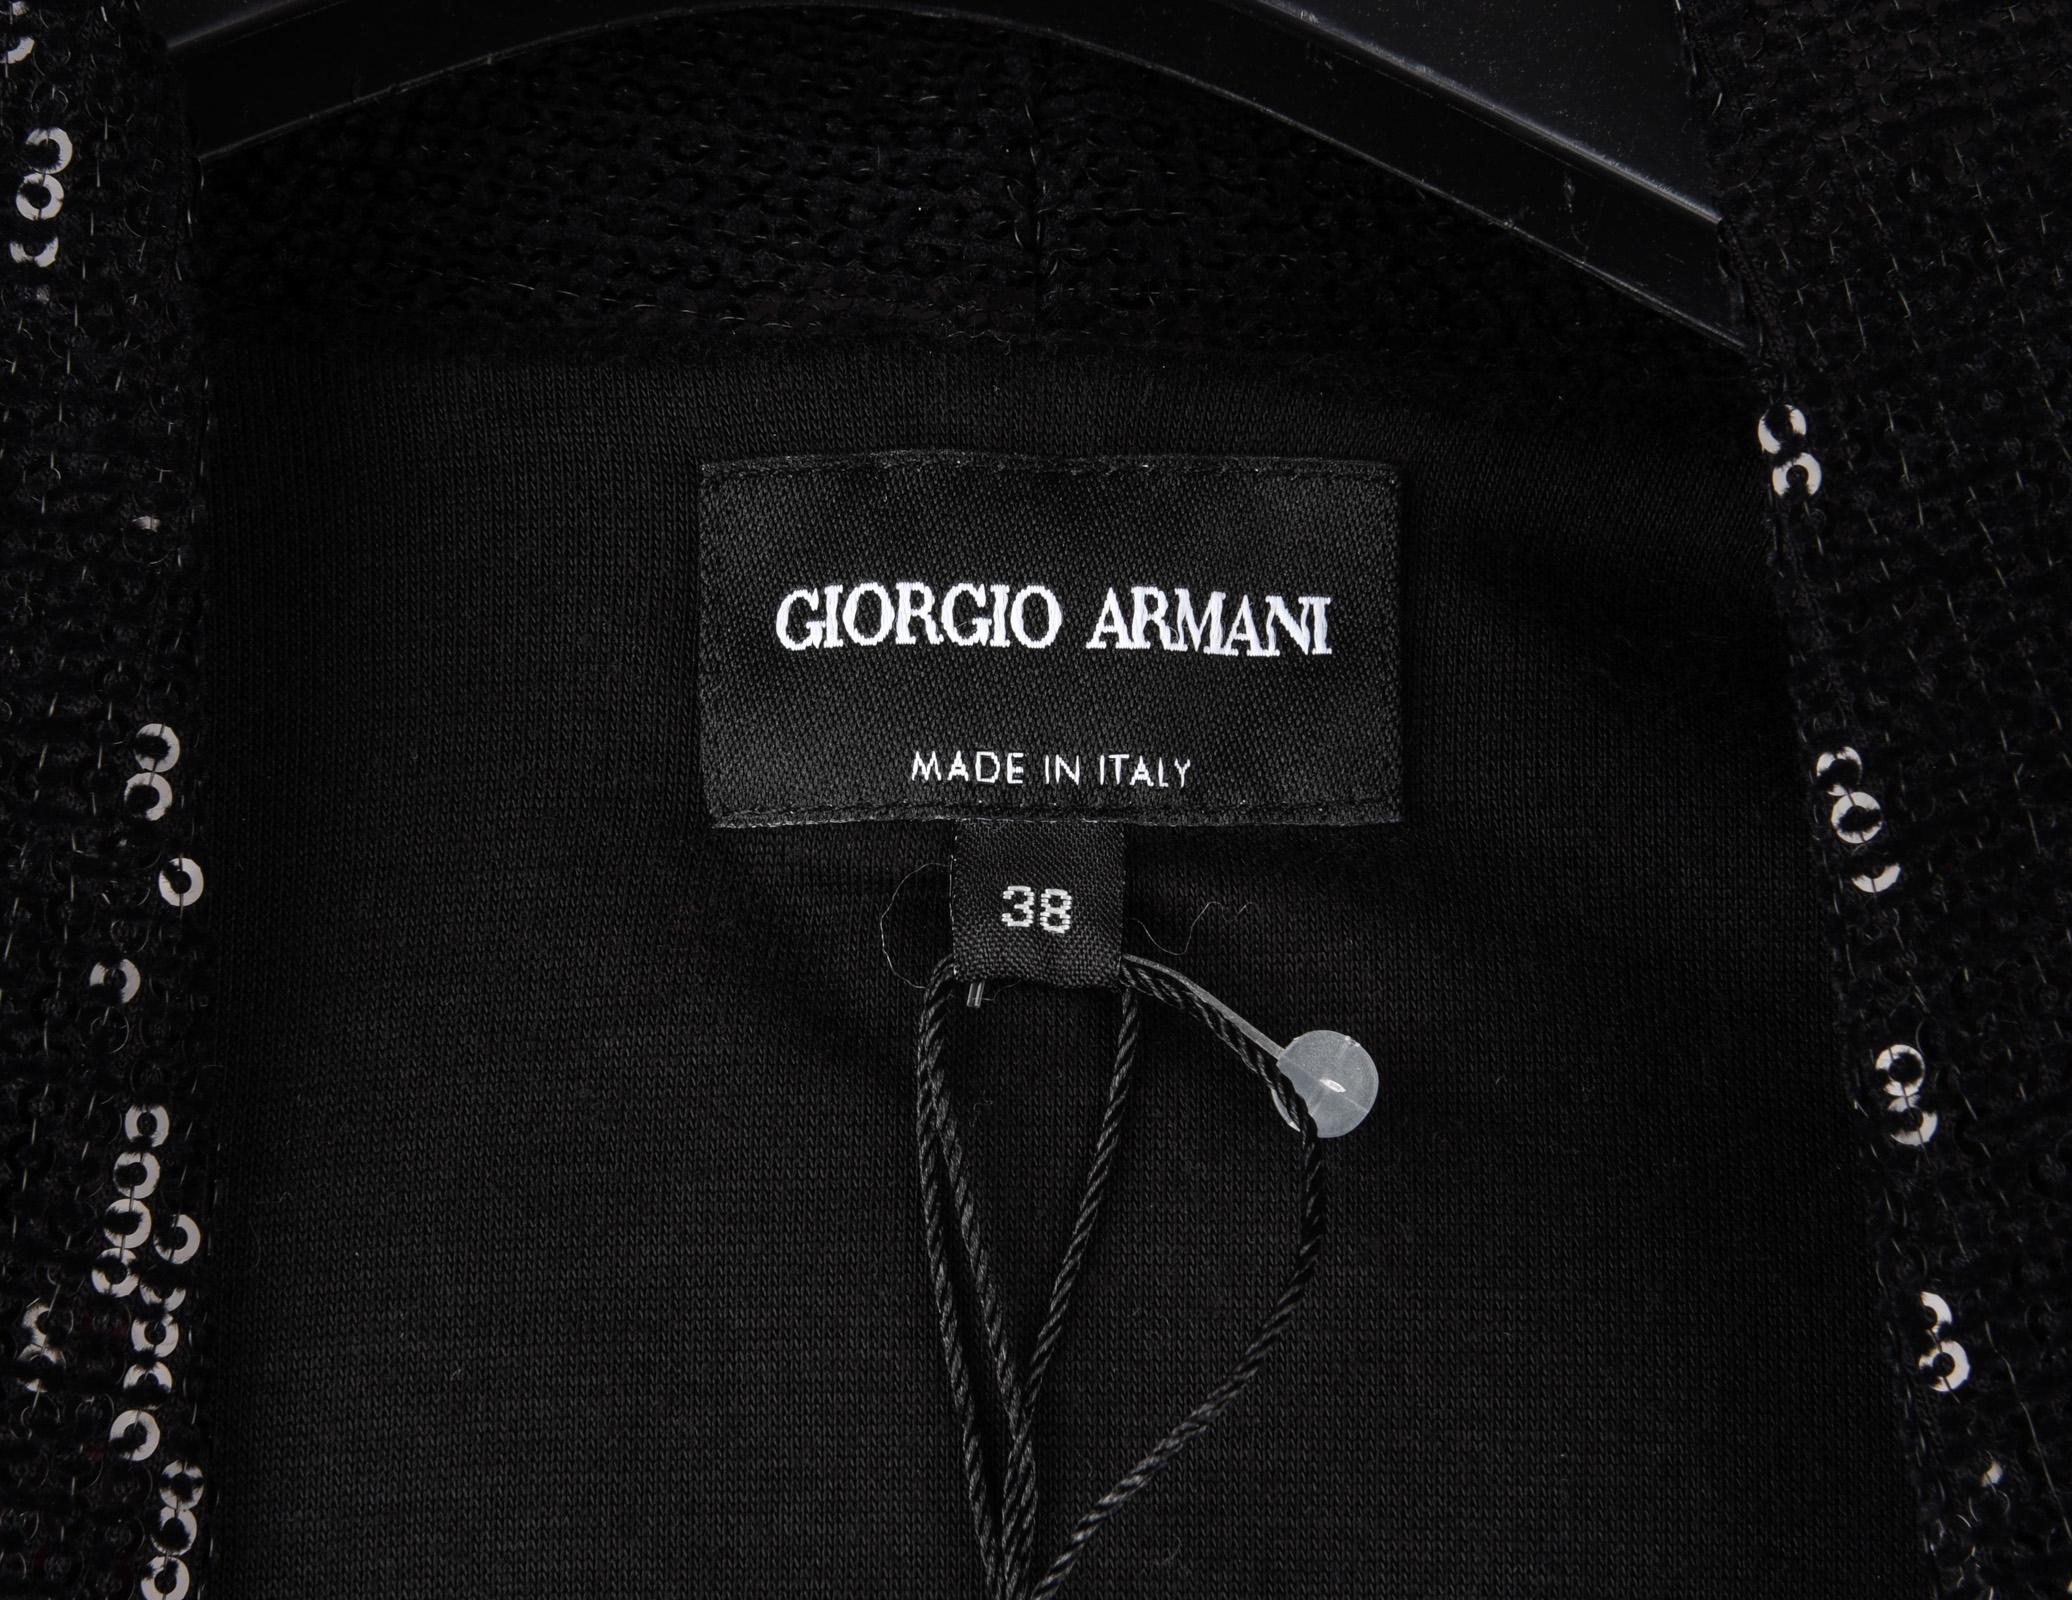 Giorgio Armani Jacket Black Sequined Single Breast 38 / 6 nwt 3